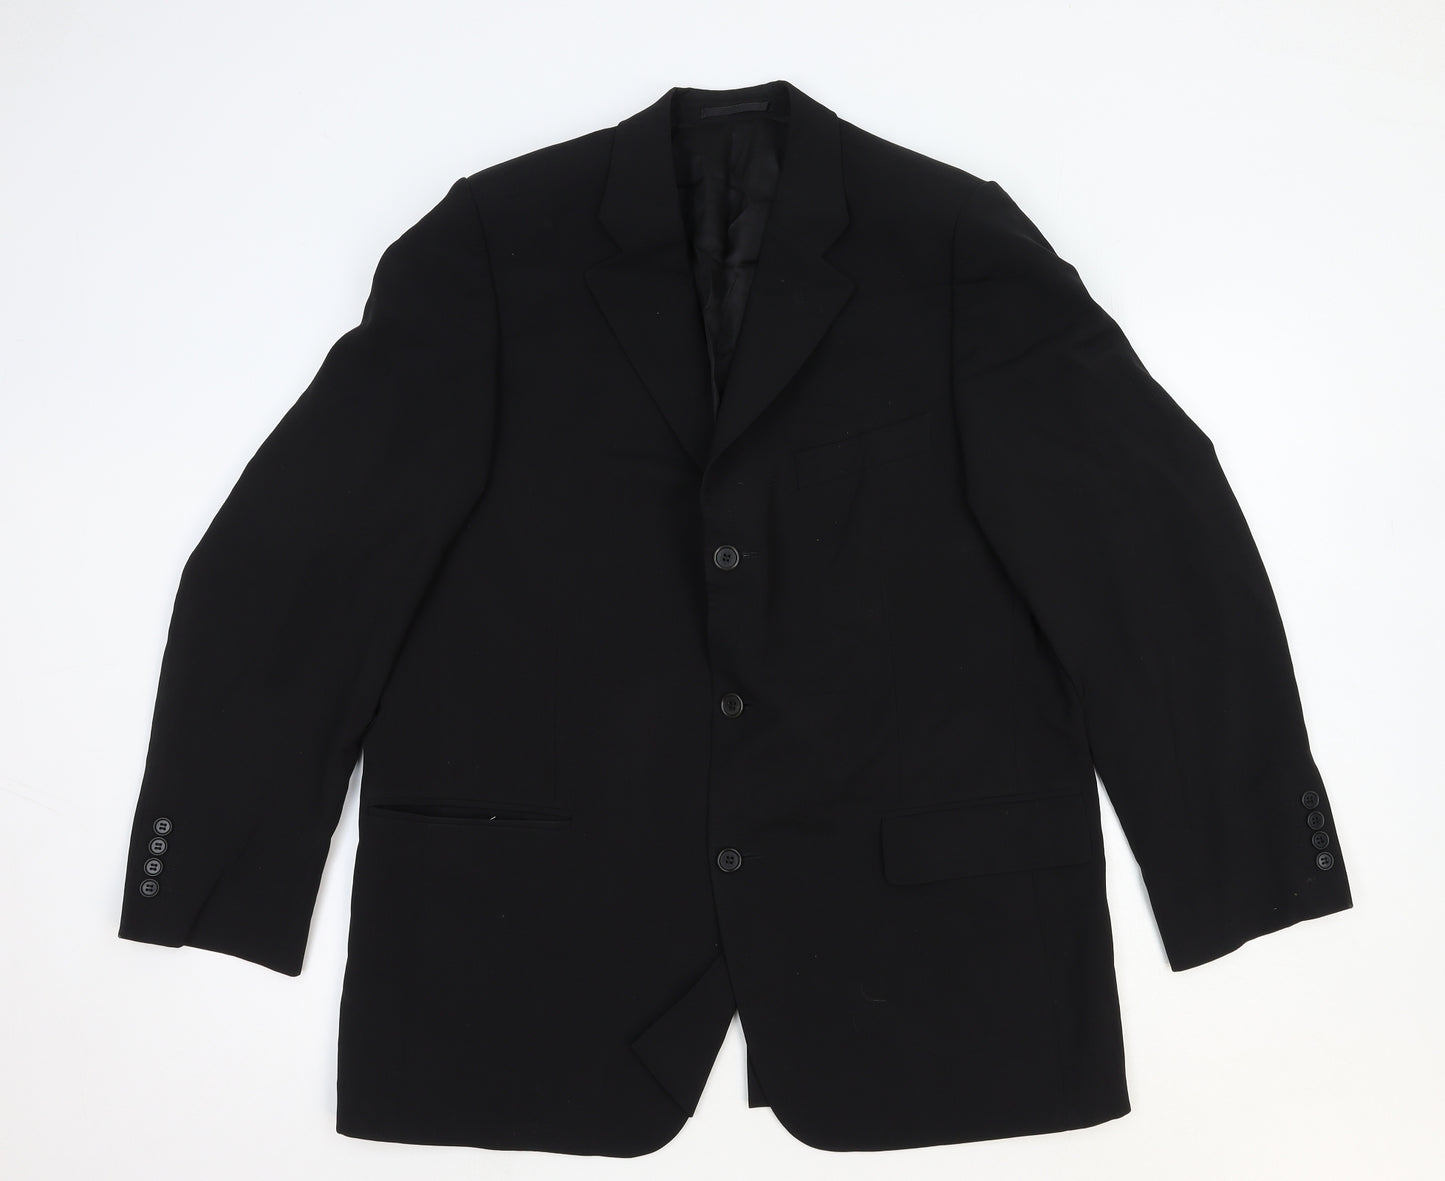 Magee Mens Black Wool Jacket Suit Jacket Size S Regular